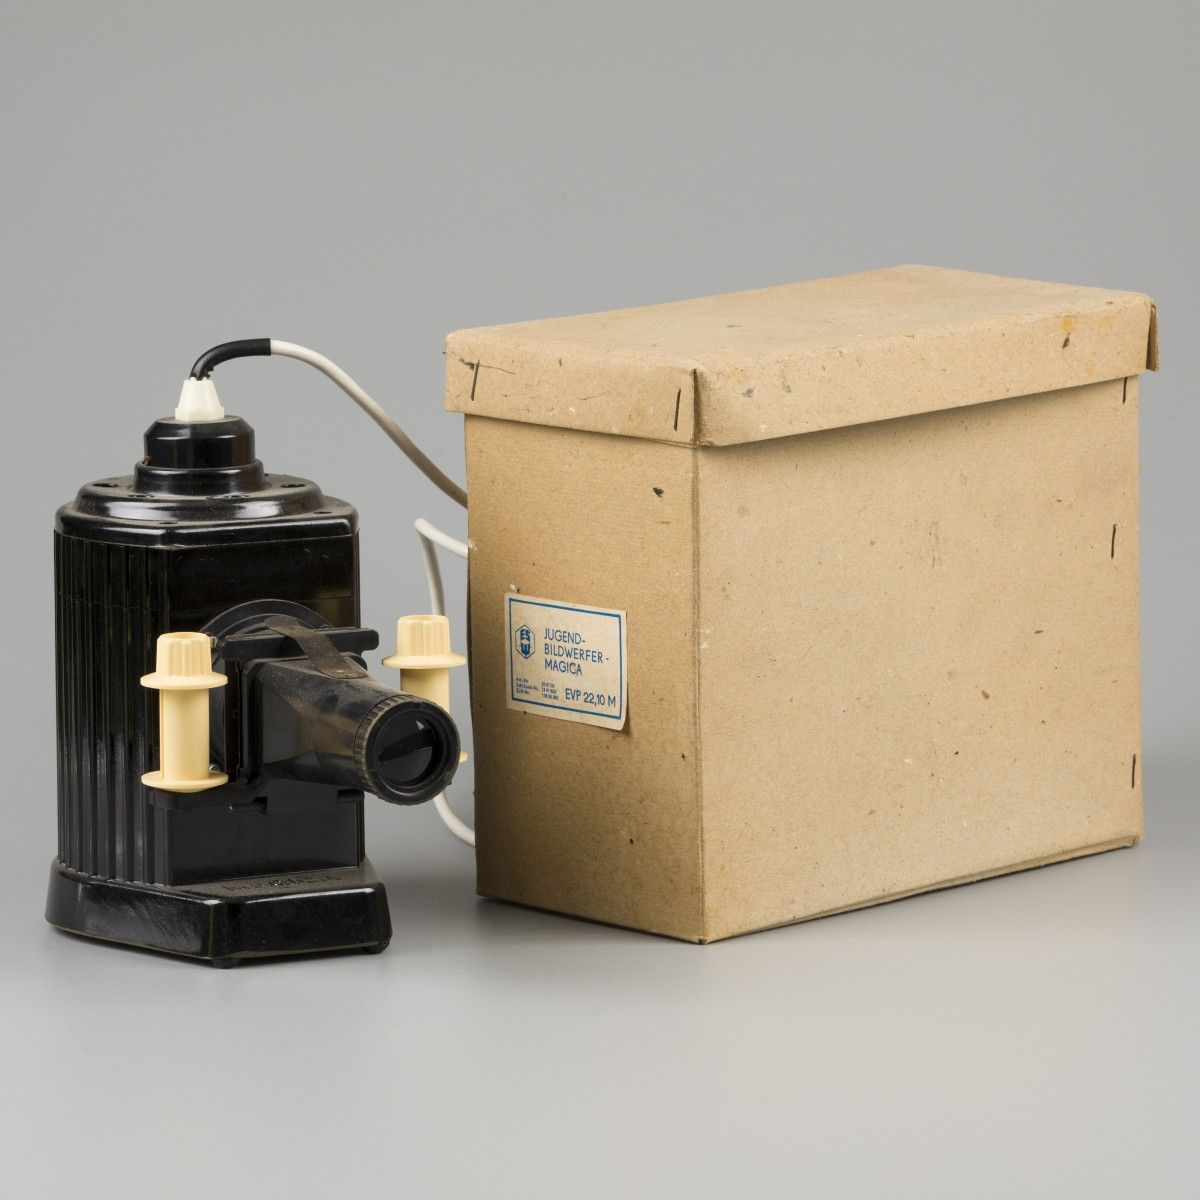 A bakelite magic lantern "Jugend Bildwerfer-Magica" EVP 22,10 mm. En caja origin&hellip;